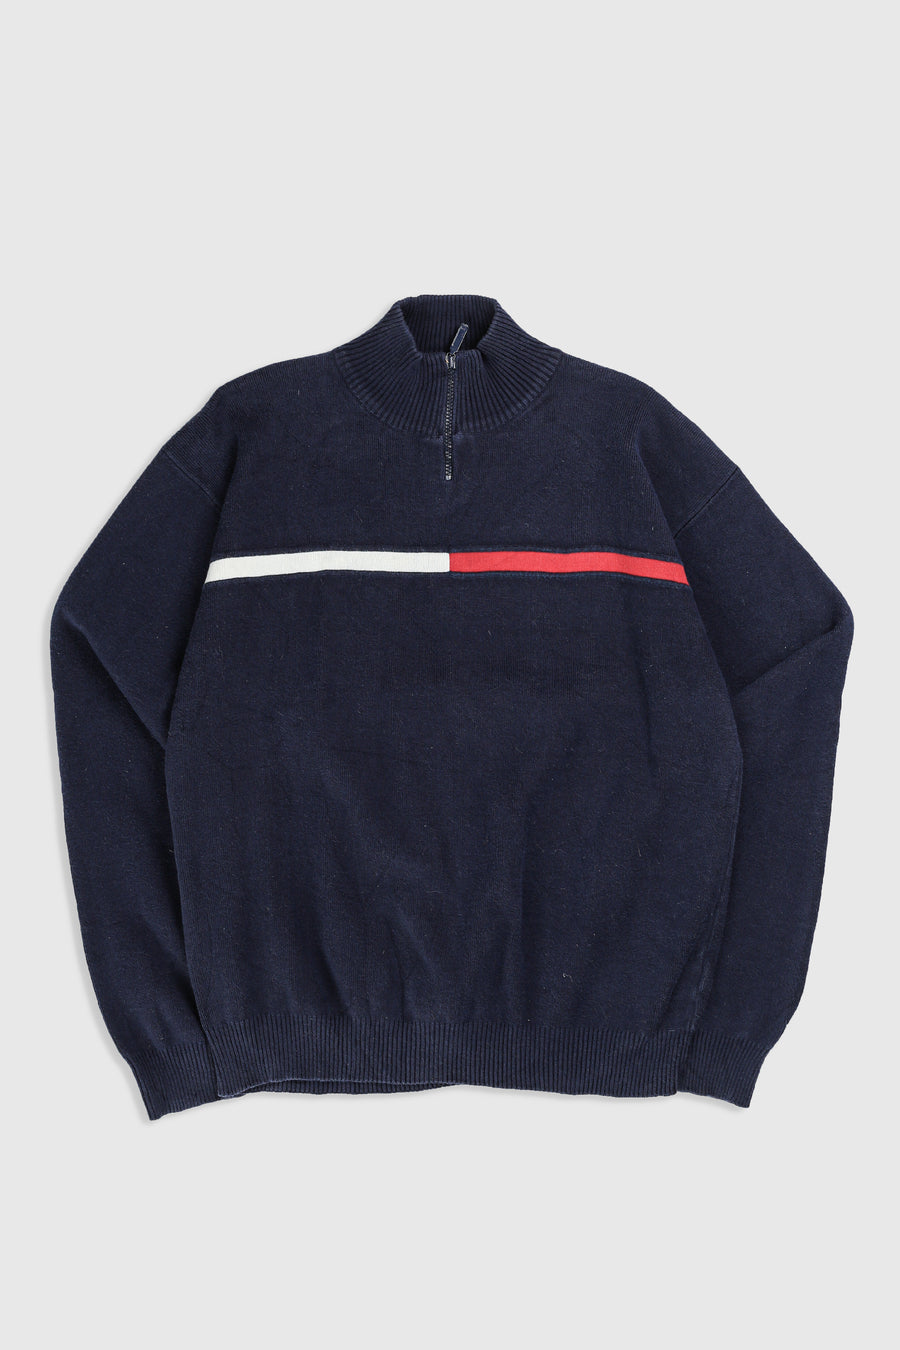 Vintage Tommy 1/4 Zip Sweater